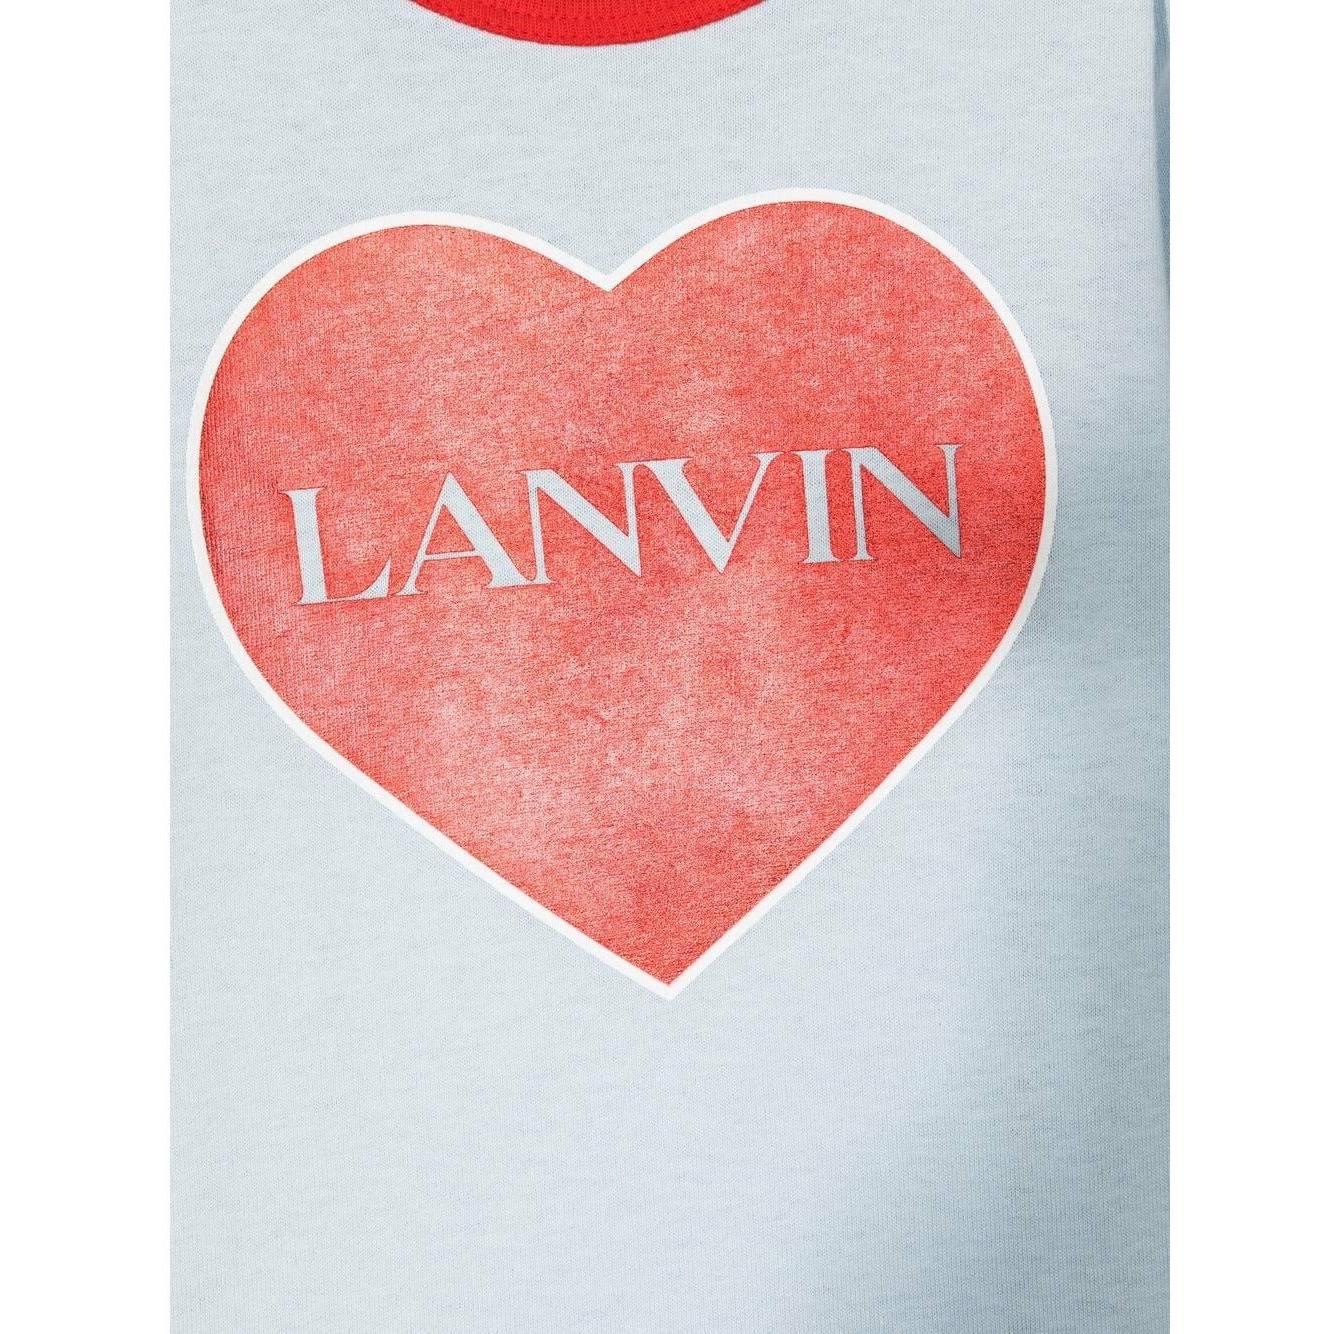 LANVIN LOGO LOVE HEART T-SHIRT